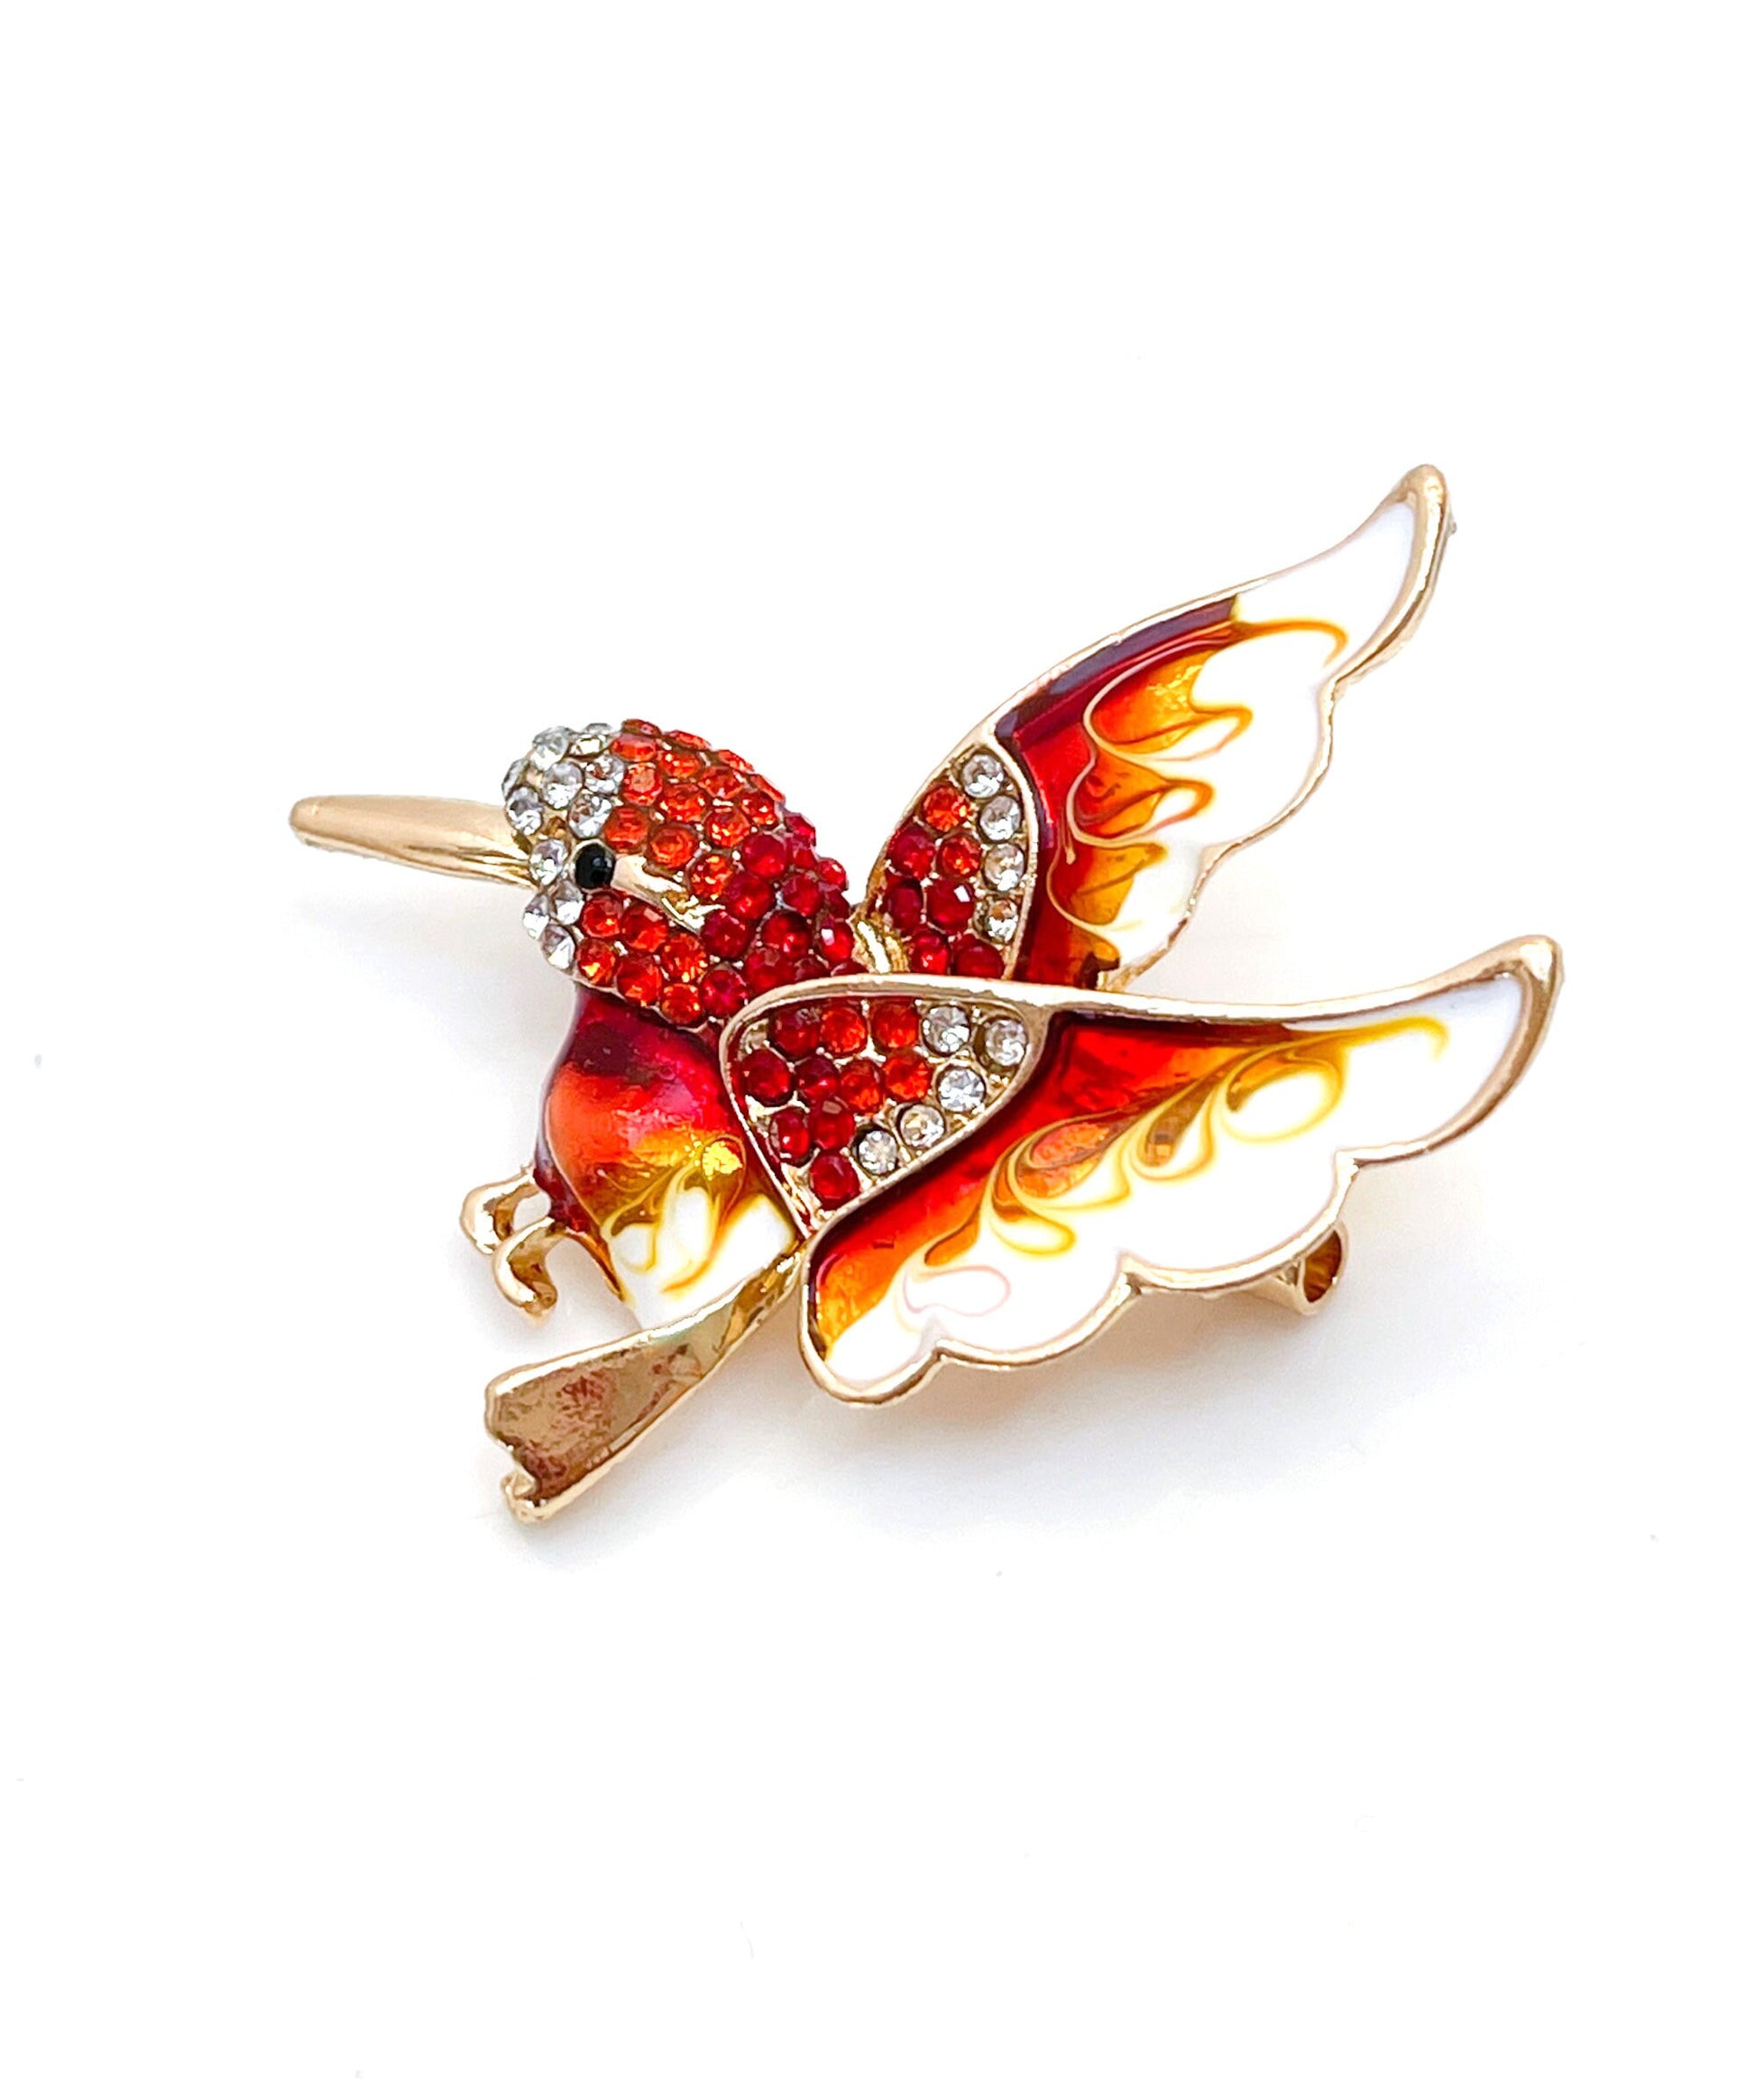 Red Hummingbird Brooch | Gift for Bird Lovers | Red and Gold Hummingbird | Cute Bird Pin